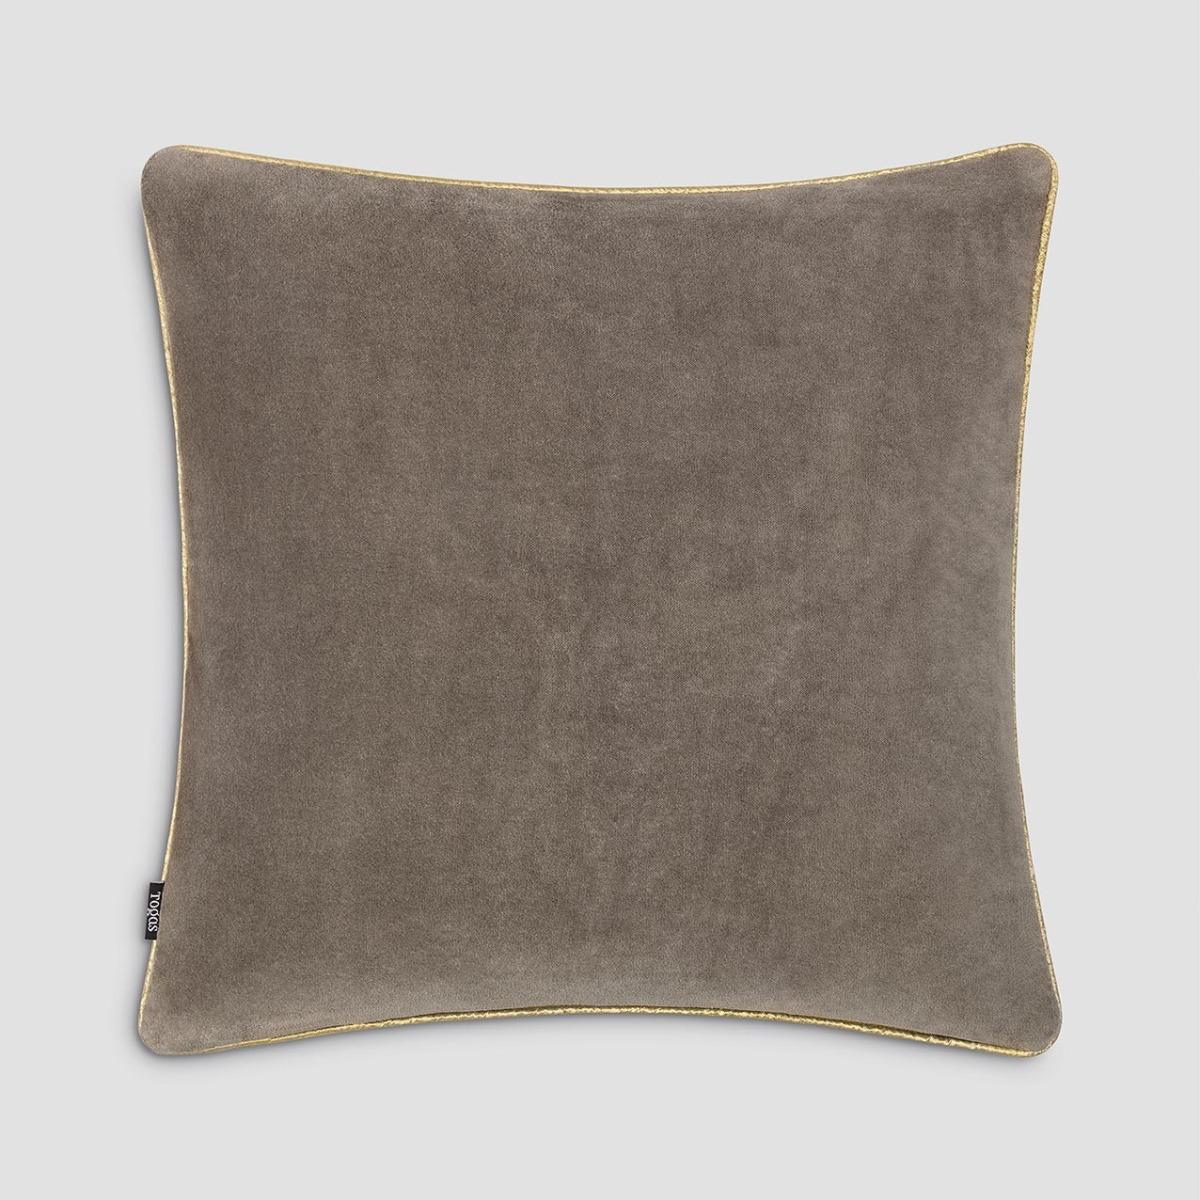 Декоративная подушка Togas Туррис коричневая 45х45 см, цвет коричневый - фото 3